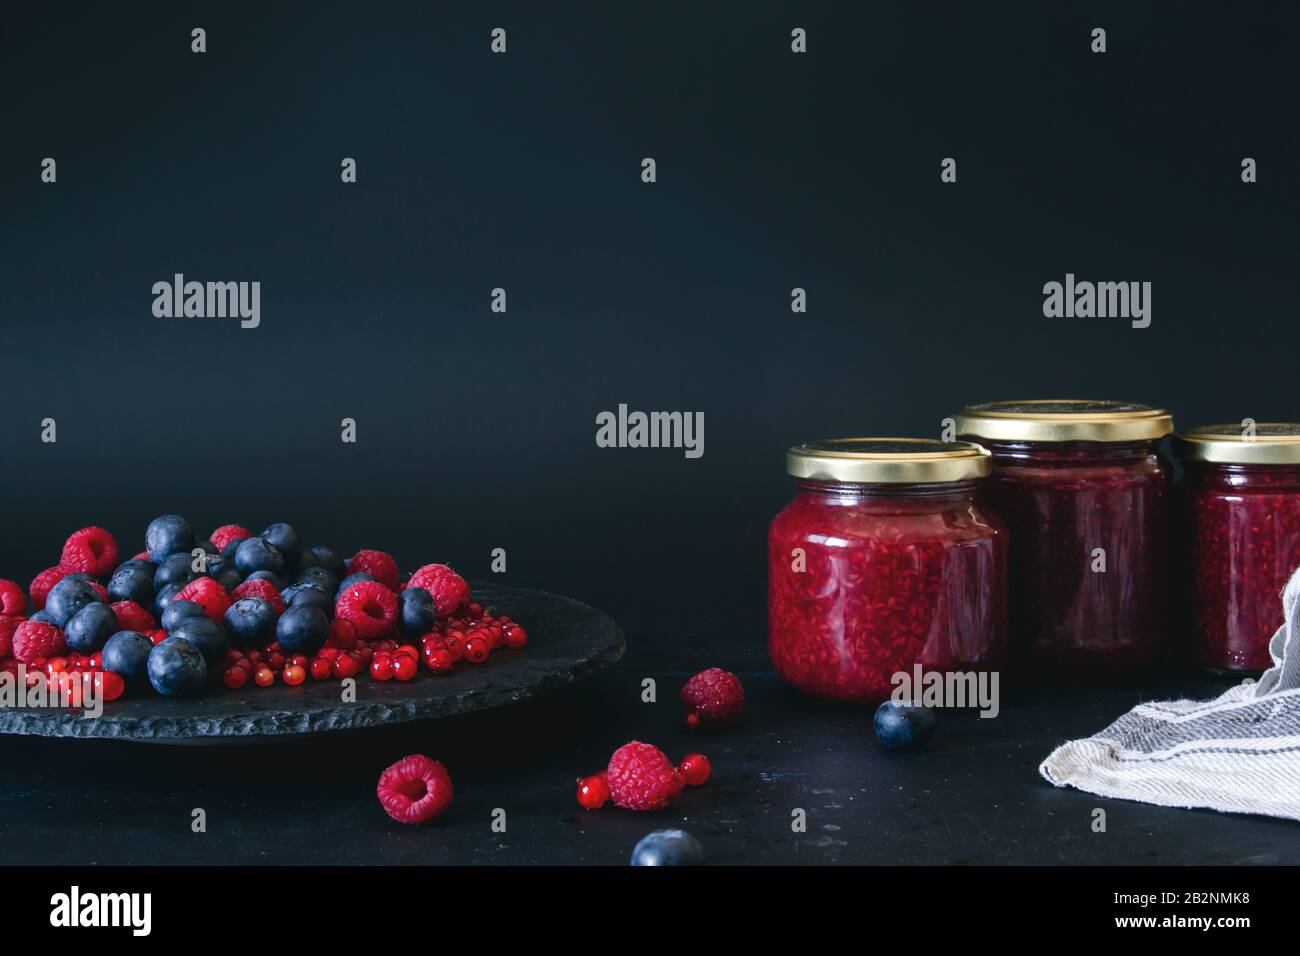 Homemade jam with fresh blueberries, raspberries and redcurrants, dark backdrop Stock Photo